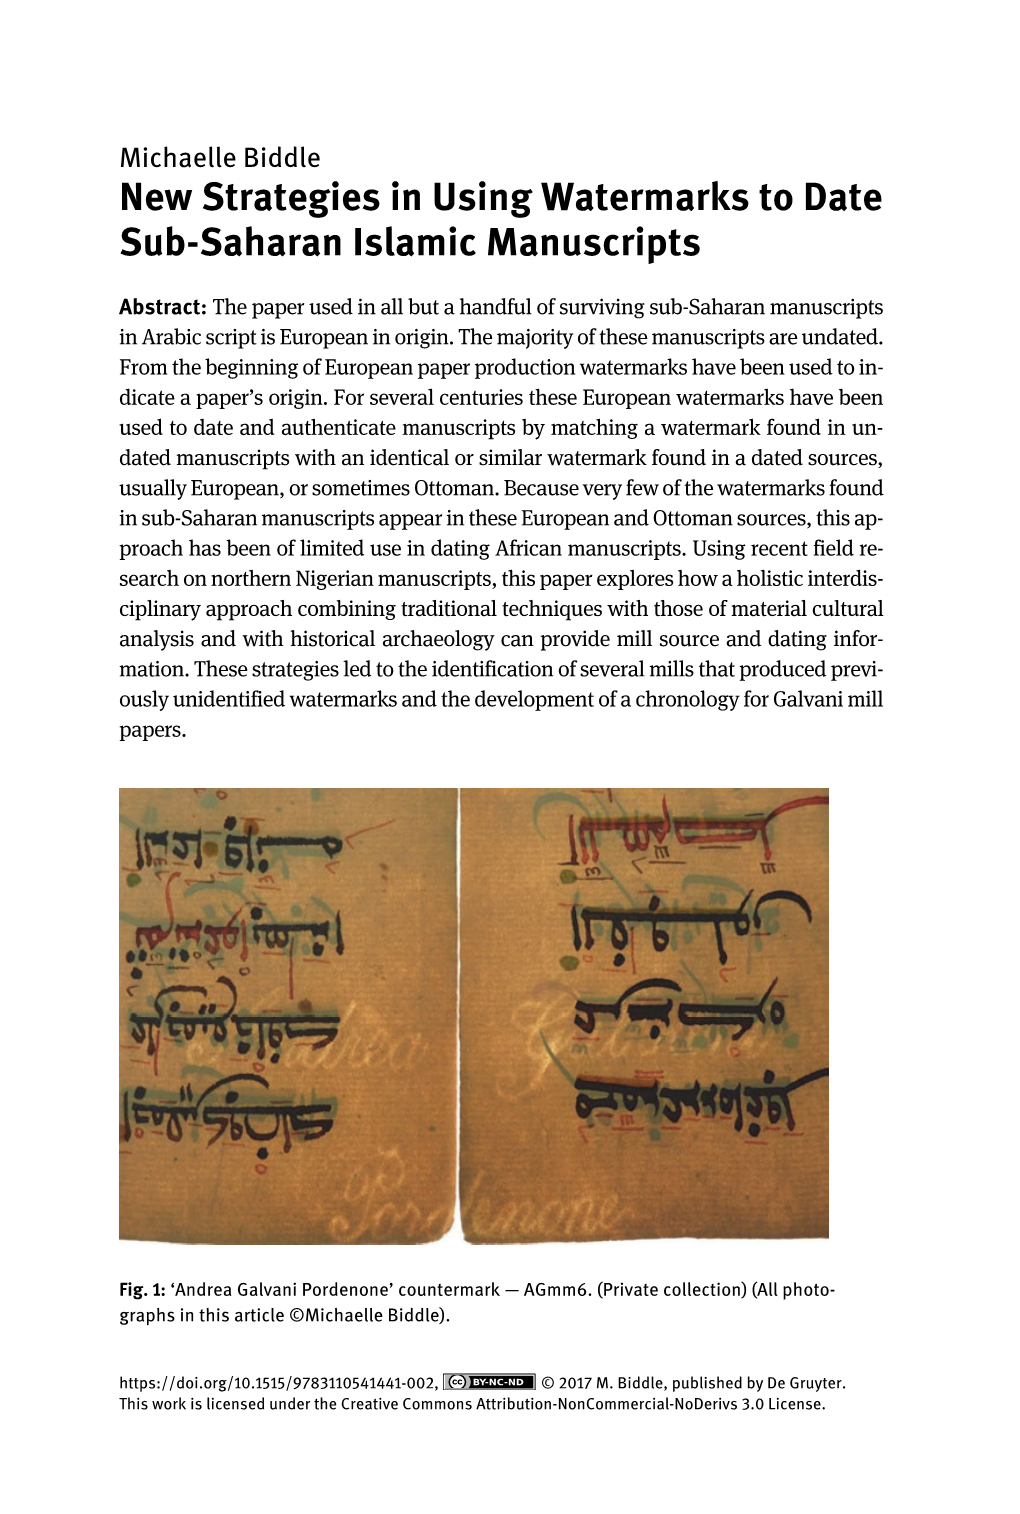 New Strategies in Using Watermarks to Date Sub-Saharan Islamic Manuscripts